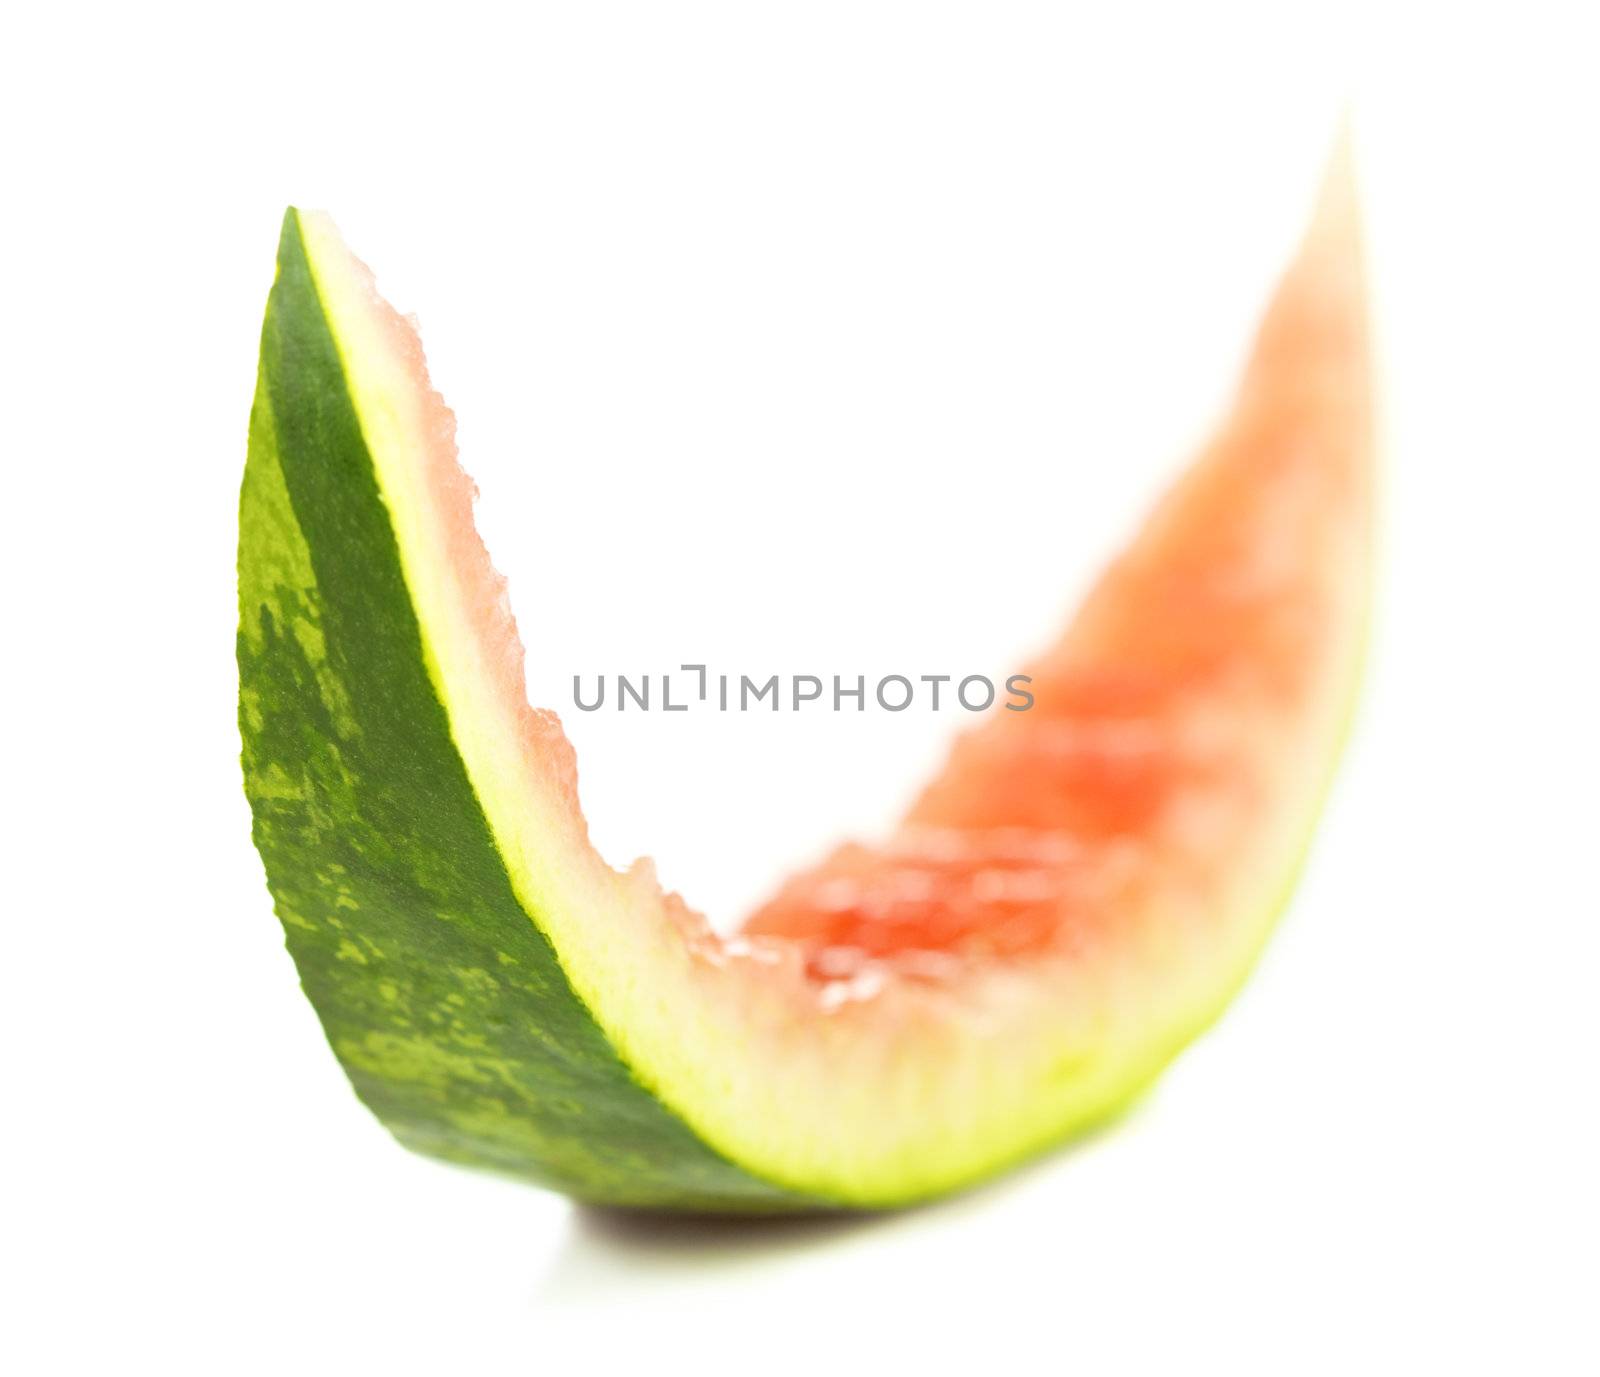 eaten slice of watermelon isolated on white